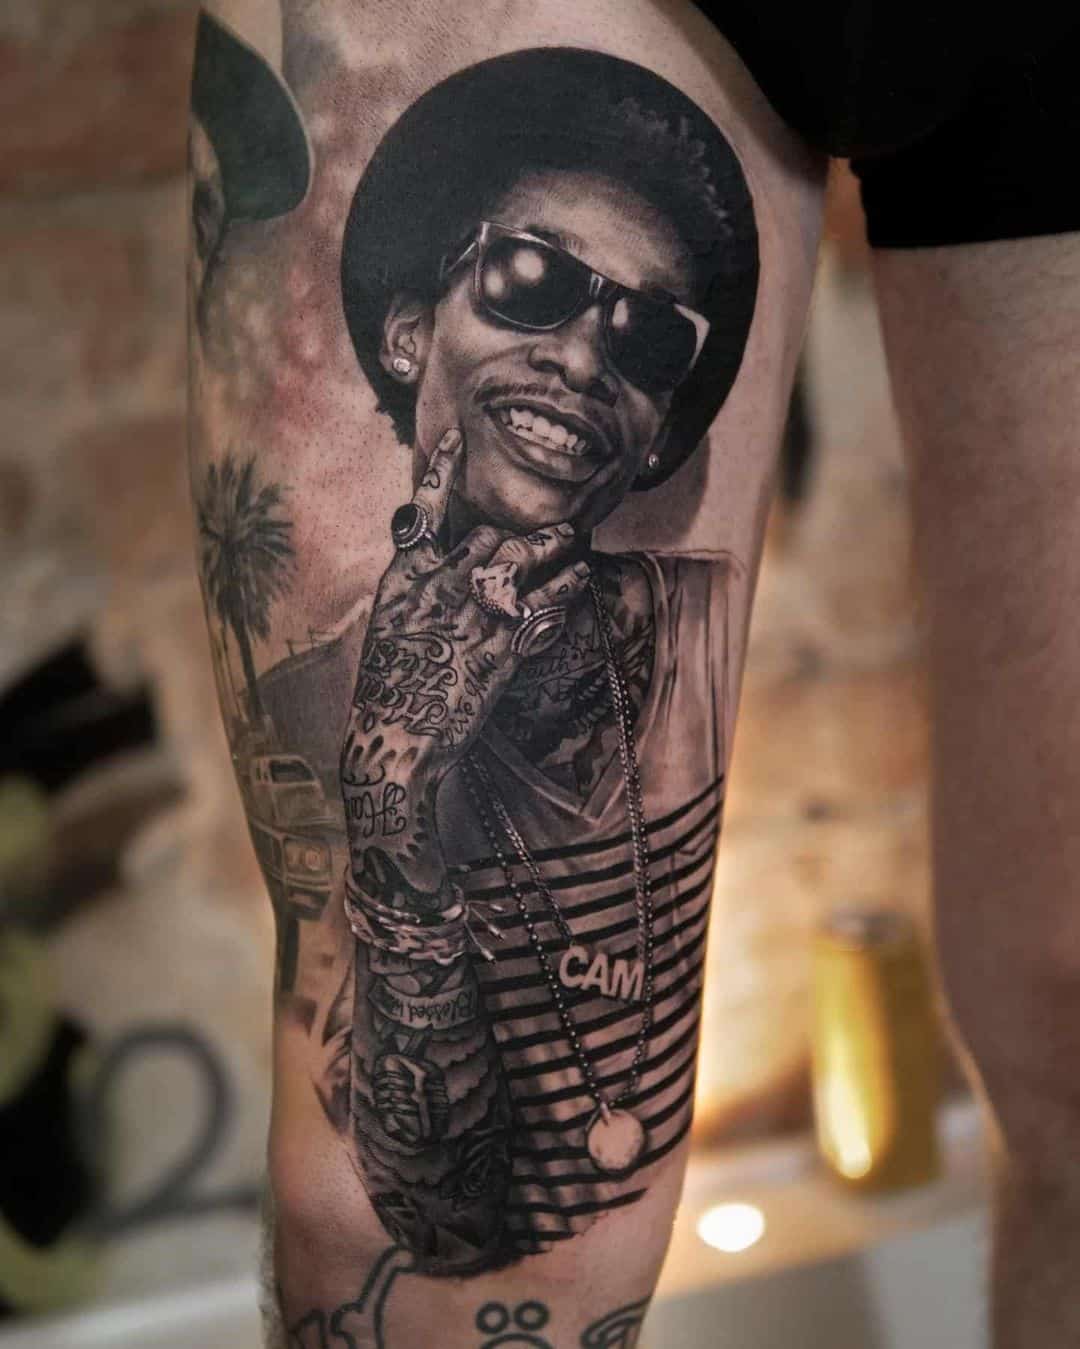 Amazing portrait tattoo by augustssonadam